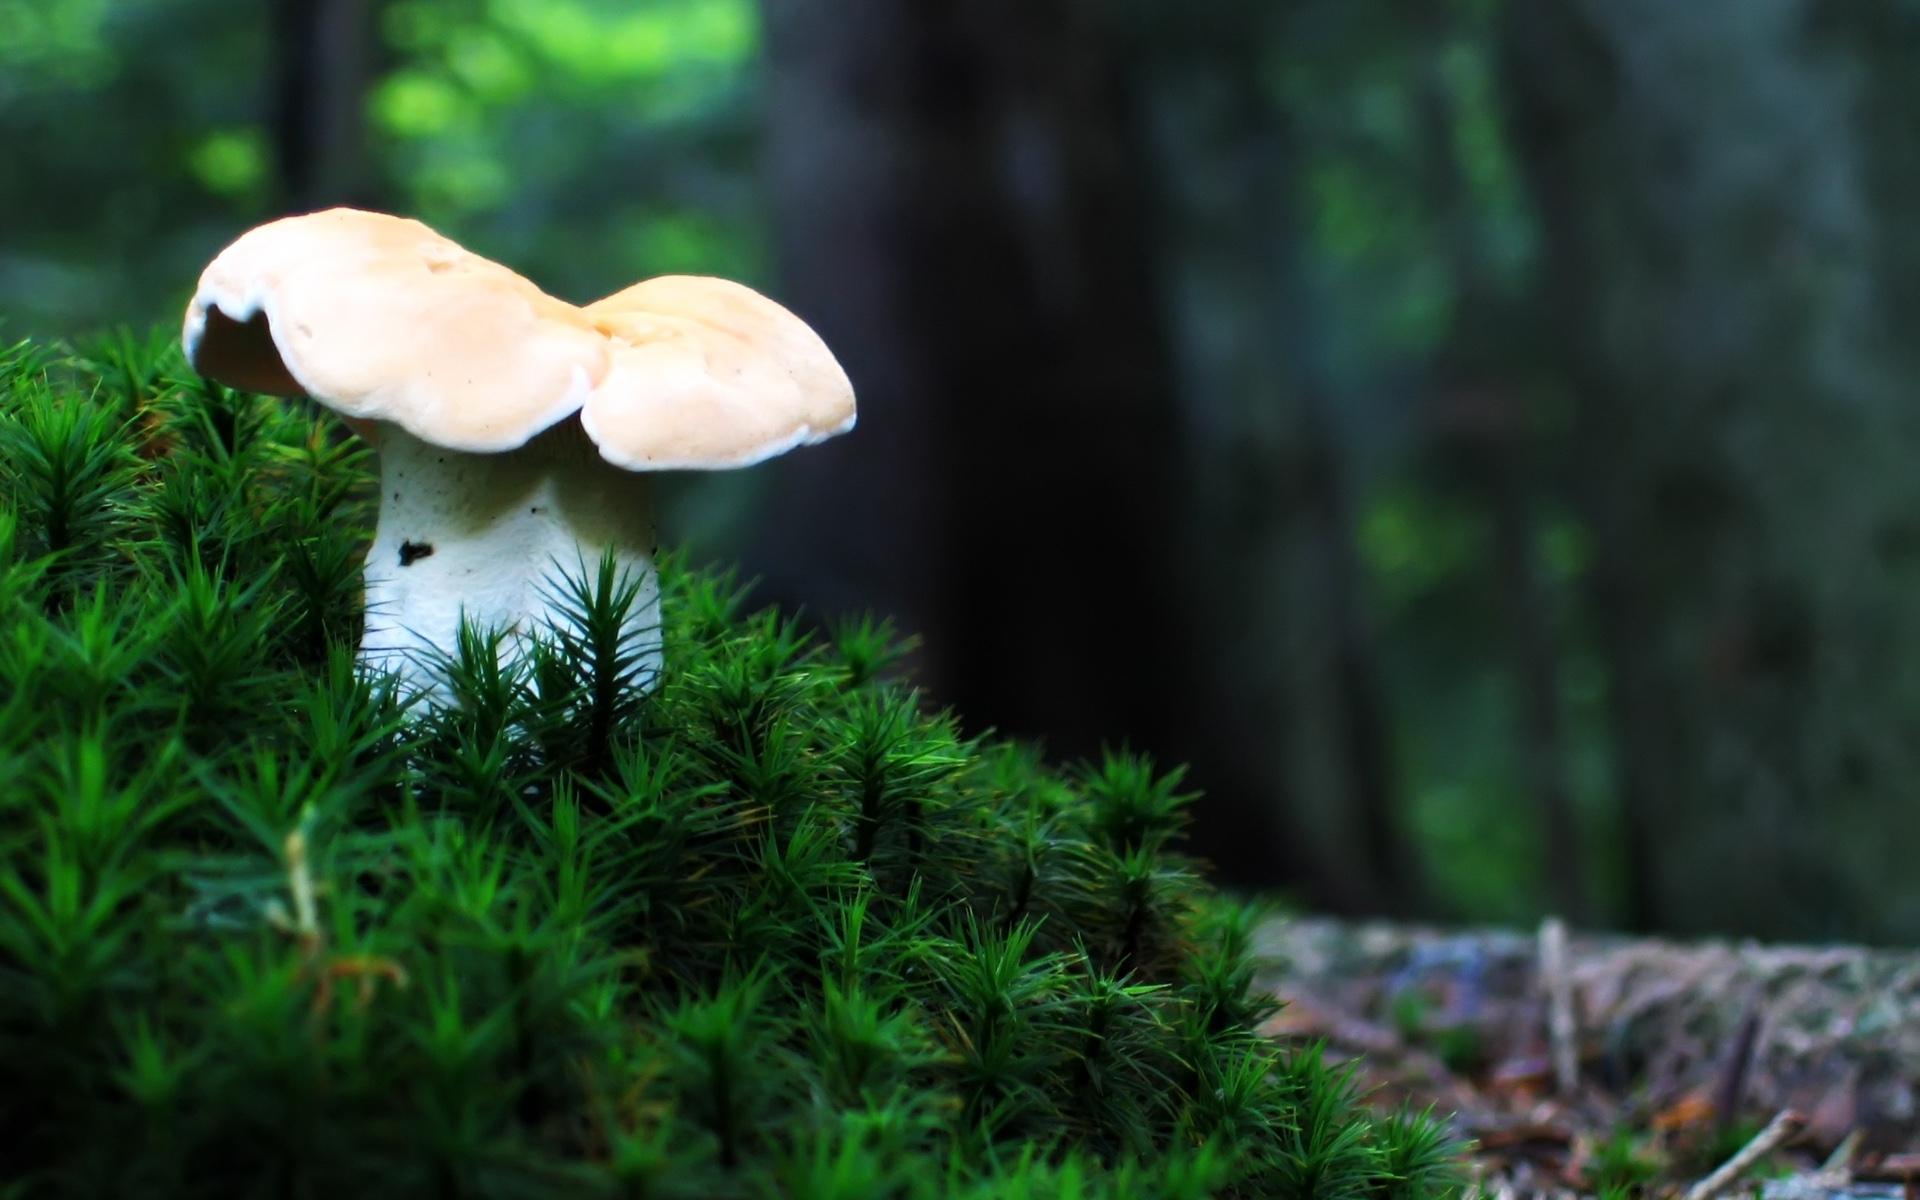 photos of mushroom